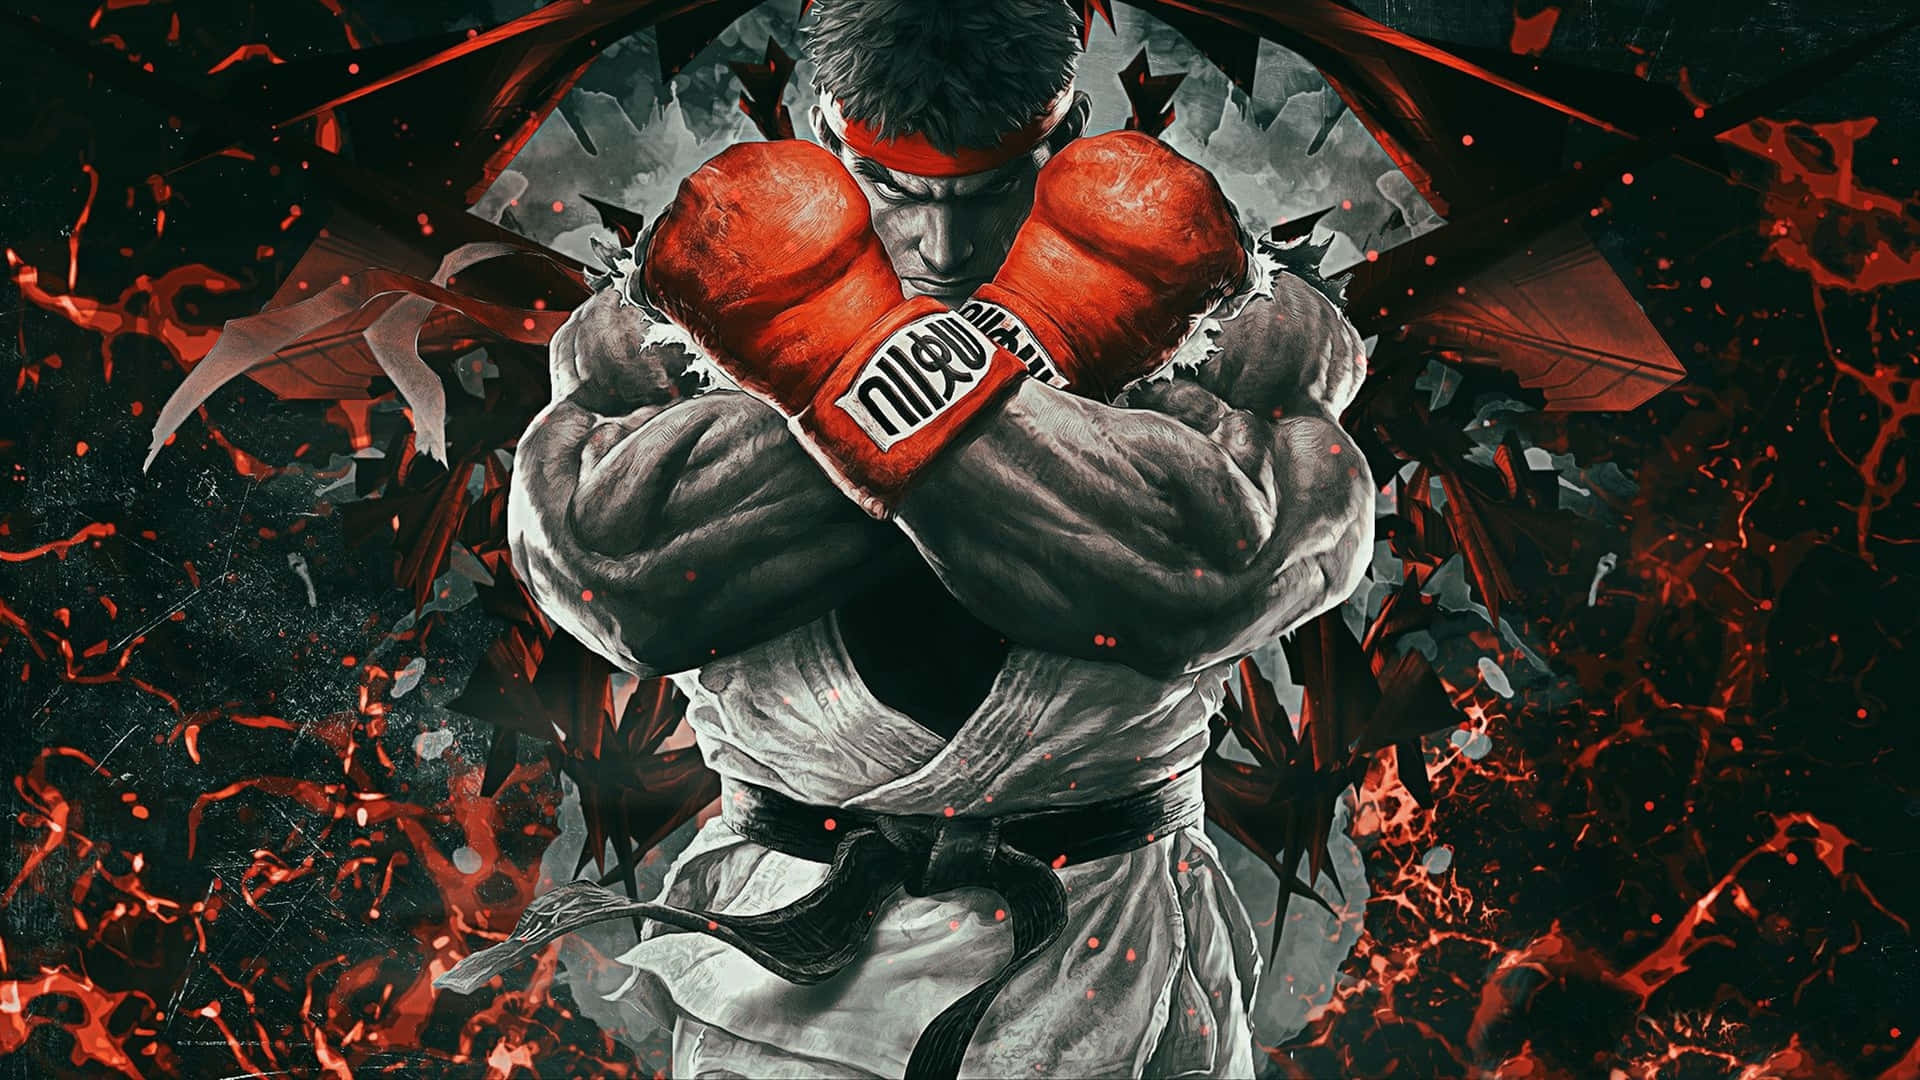 HD wallpaper: Street Fighter 4 Ryu, Ryu and Ken from Street Fighter, Games  | Wallpaper Flare